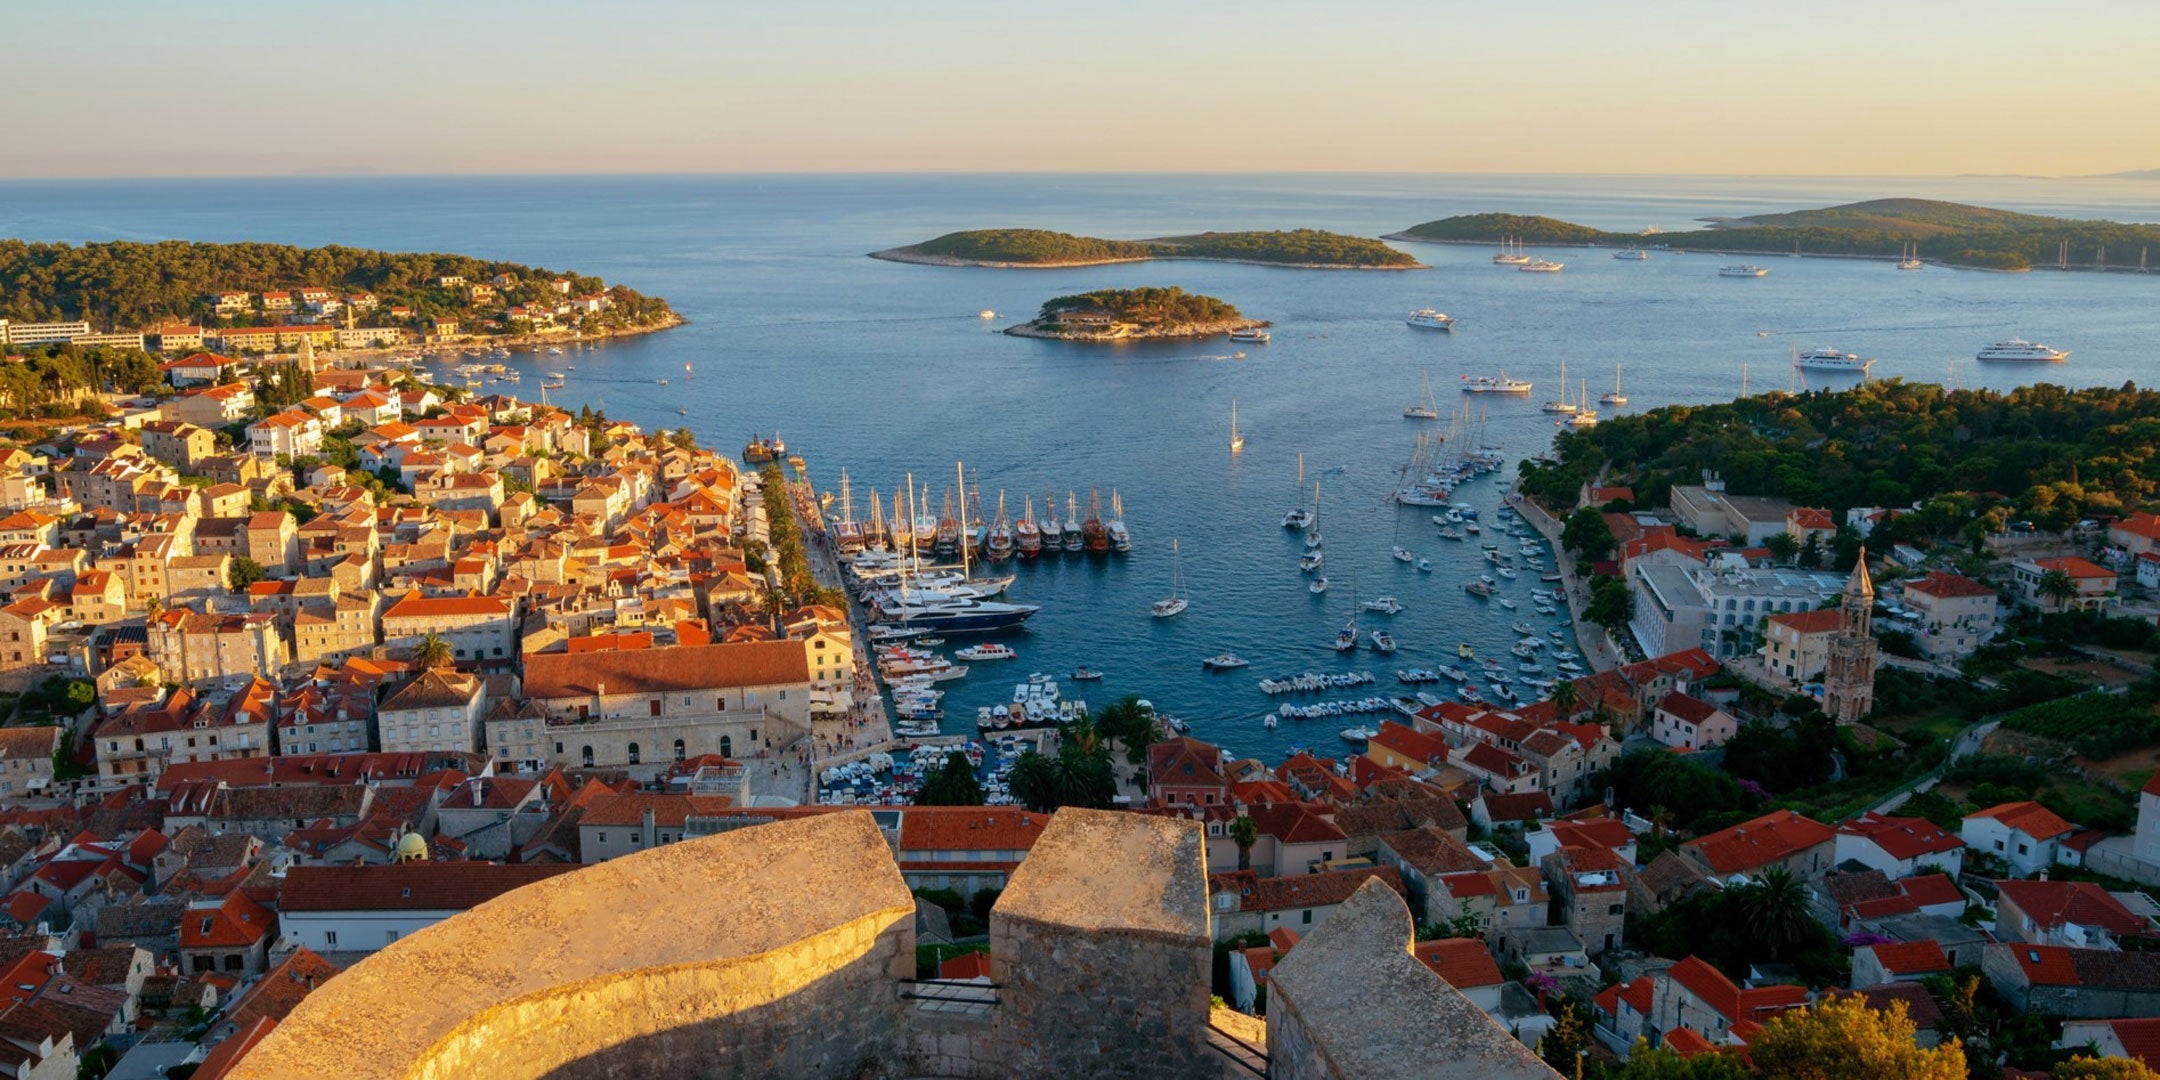 The island of Hvar is located in Dalmatia